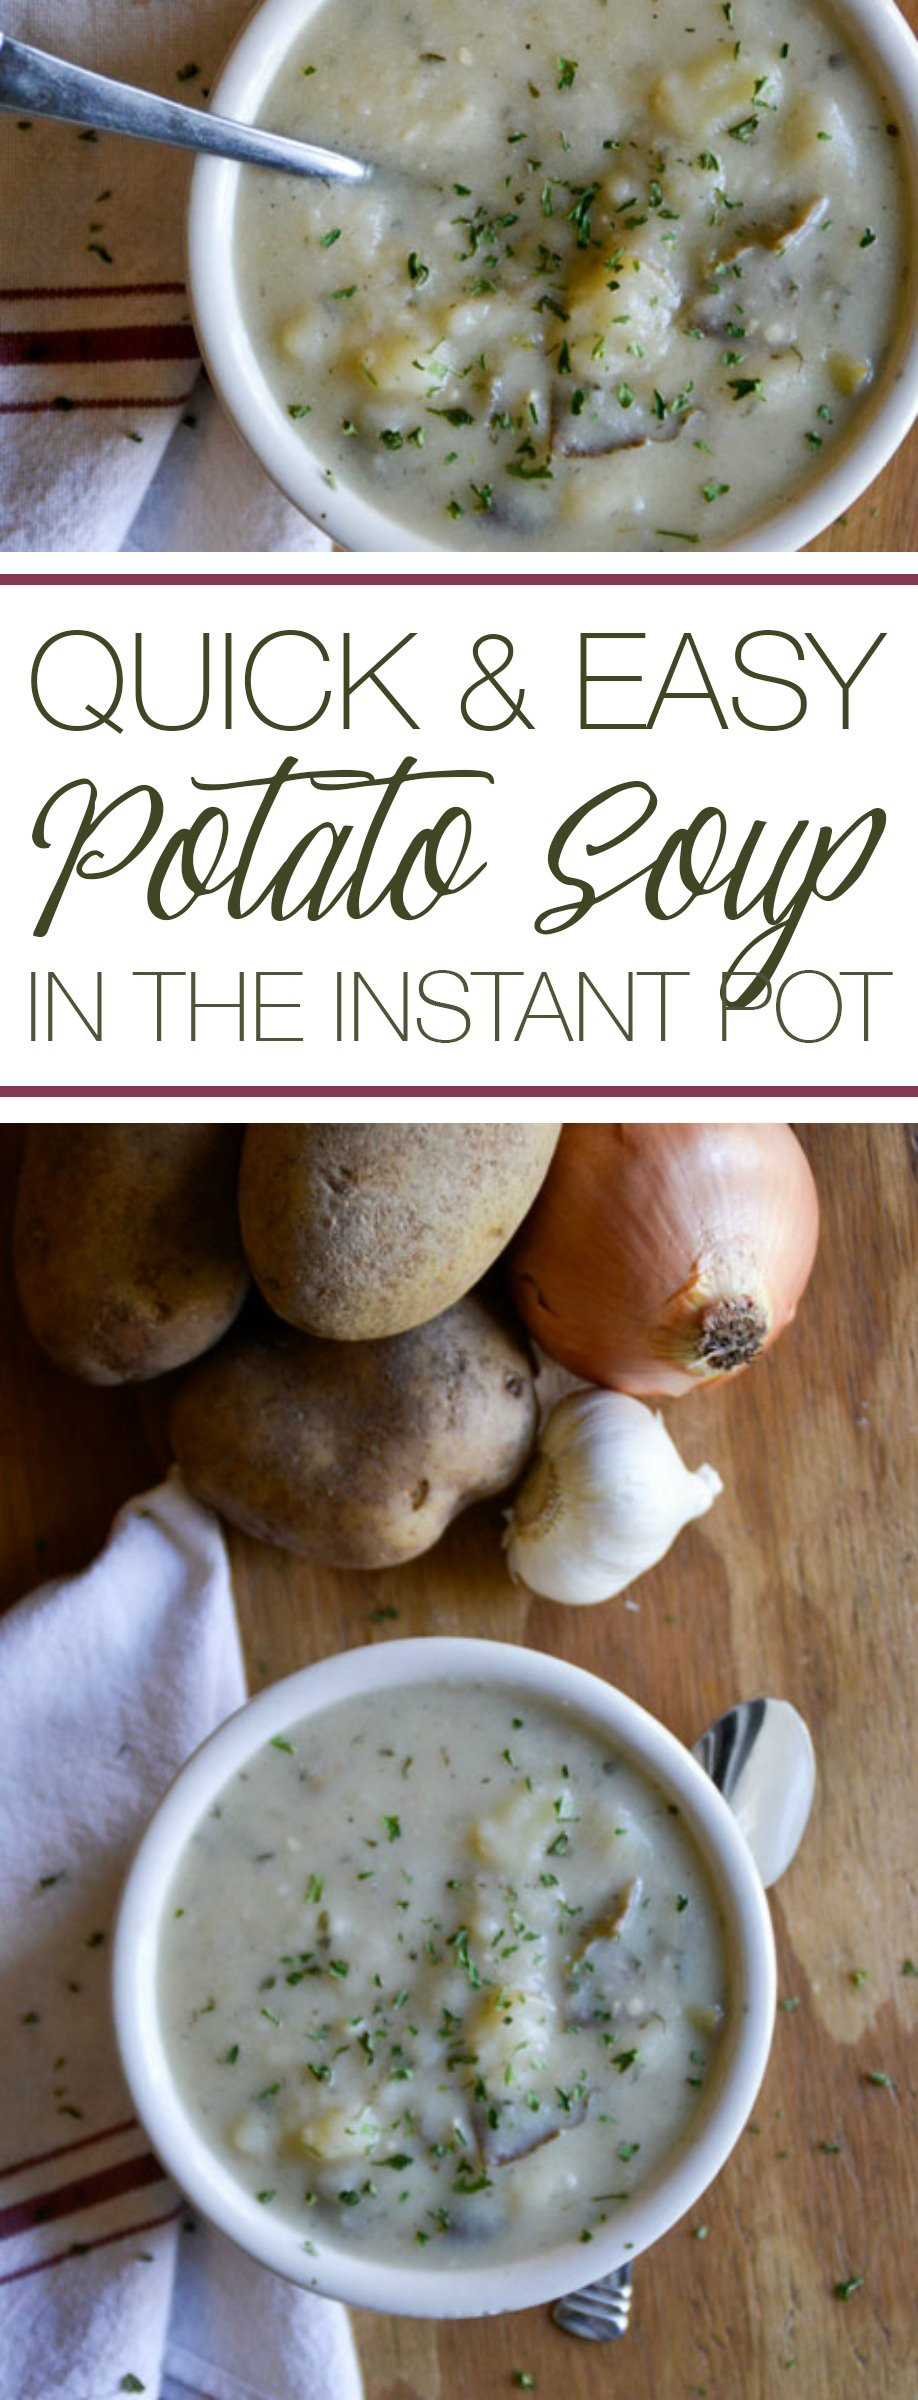 Quick And Easy Potato Soup
 Grain Free Quick & Easy Potato Soup in the Instant Pot